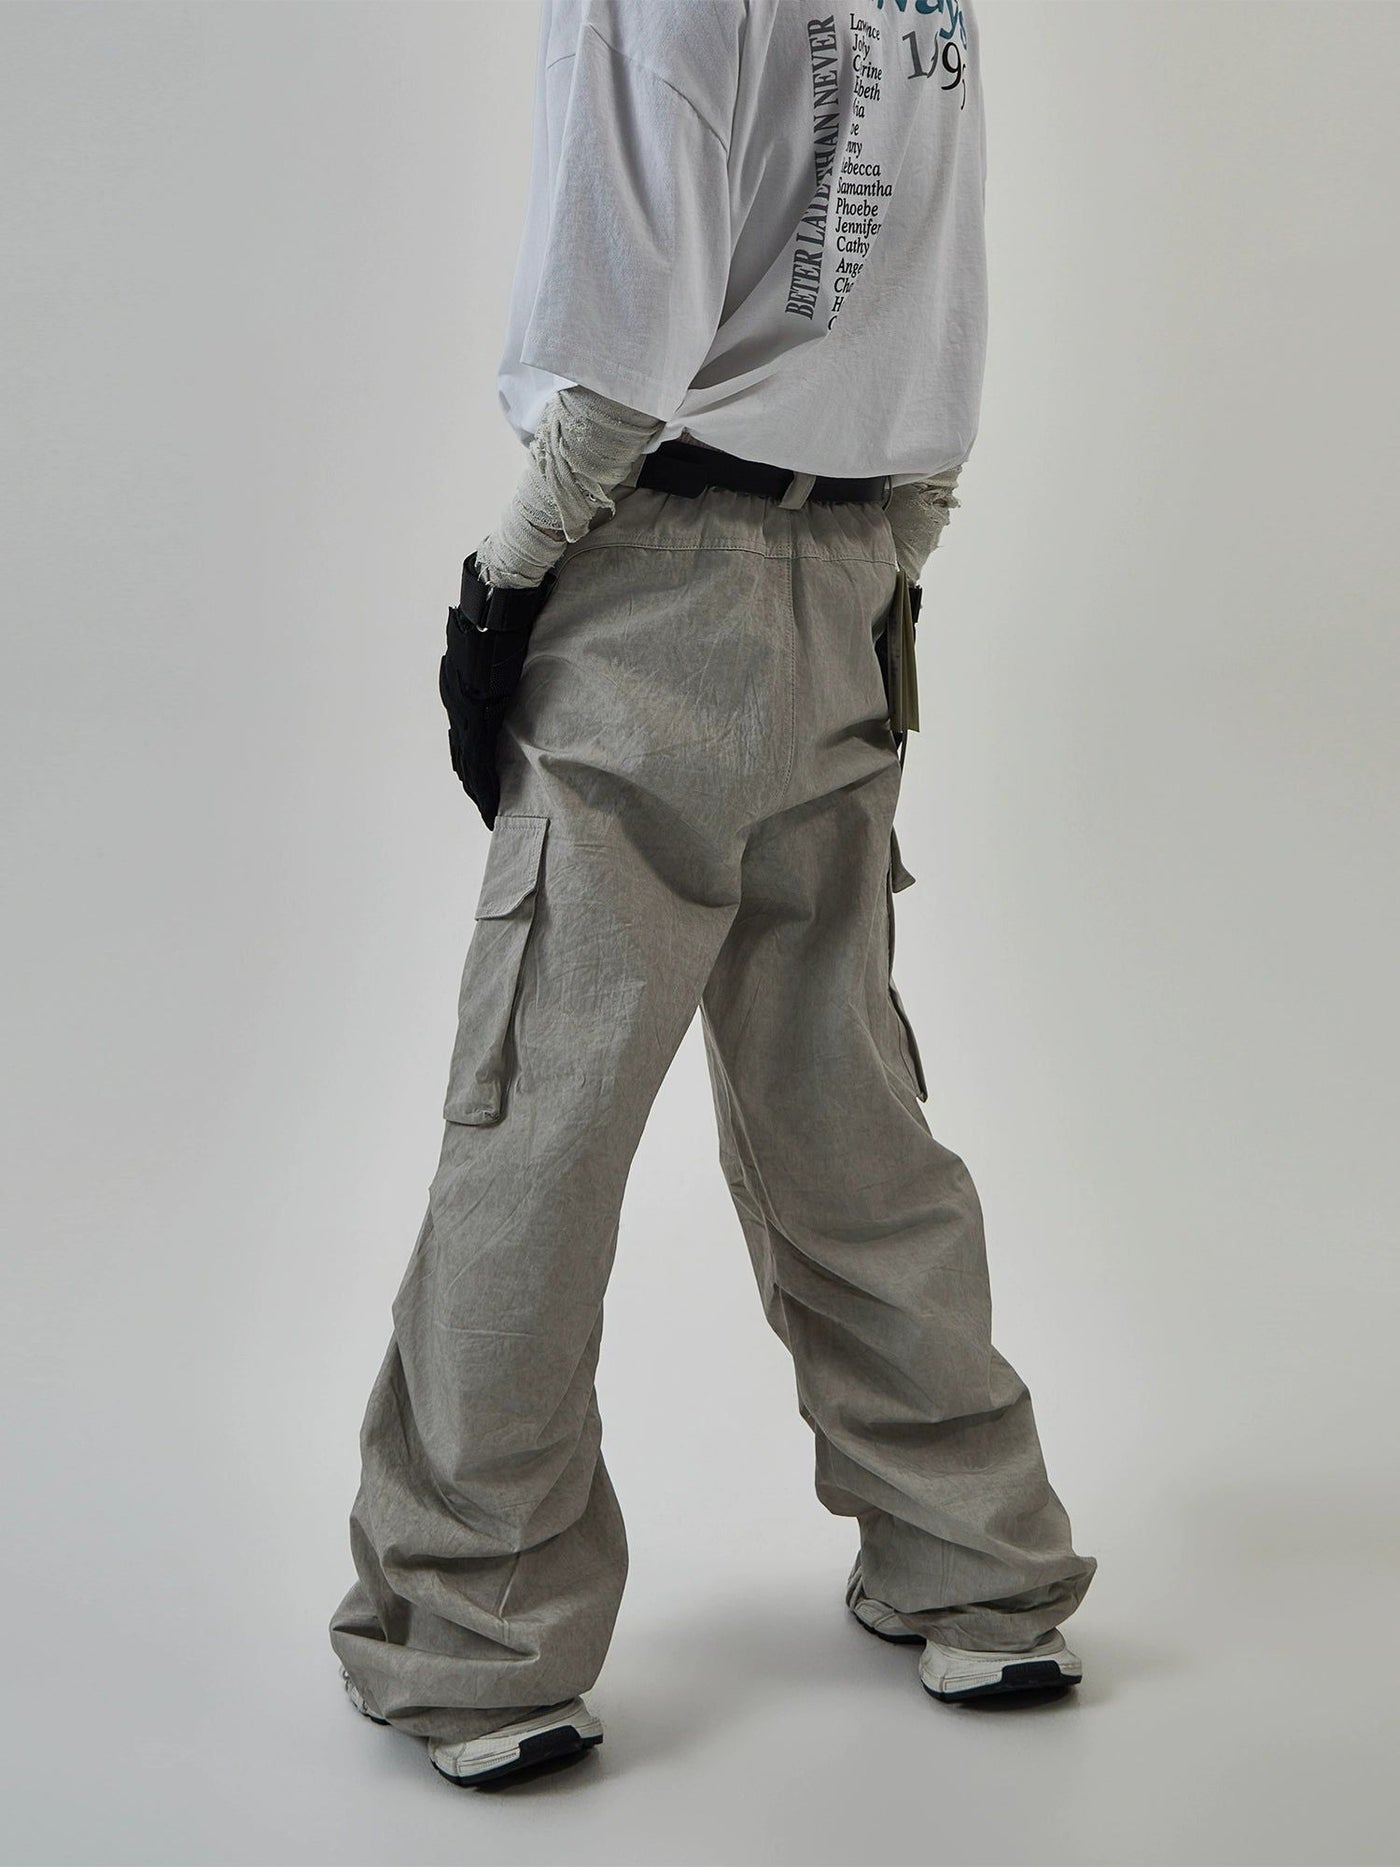 Layered Pleats Cargo Pants Korean Street Fashion Pants By Ash Dark Shop Online at OH Vault